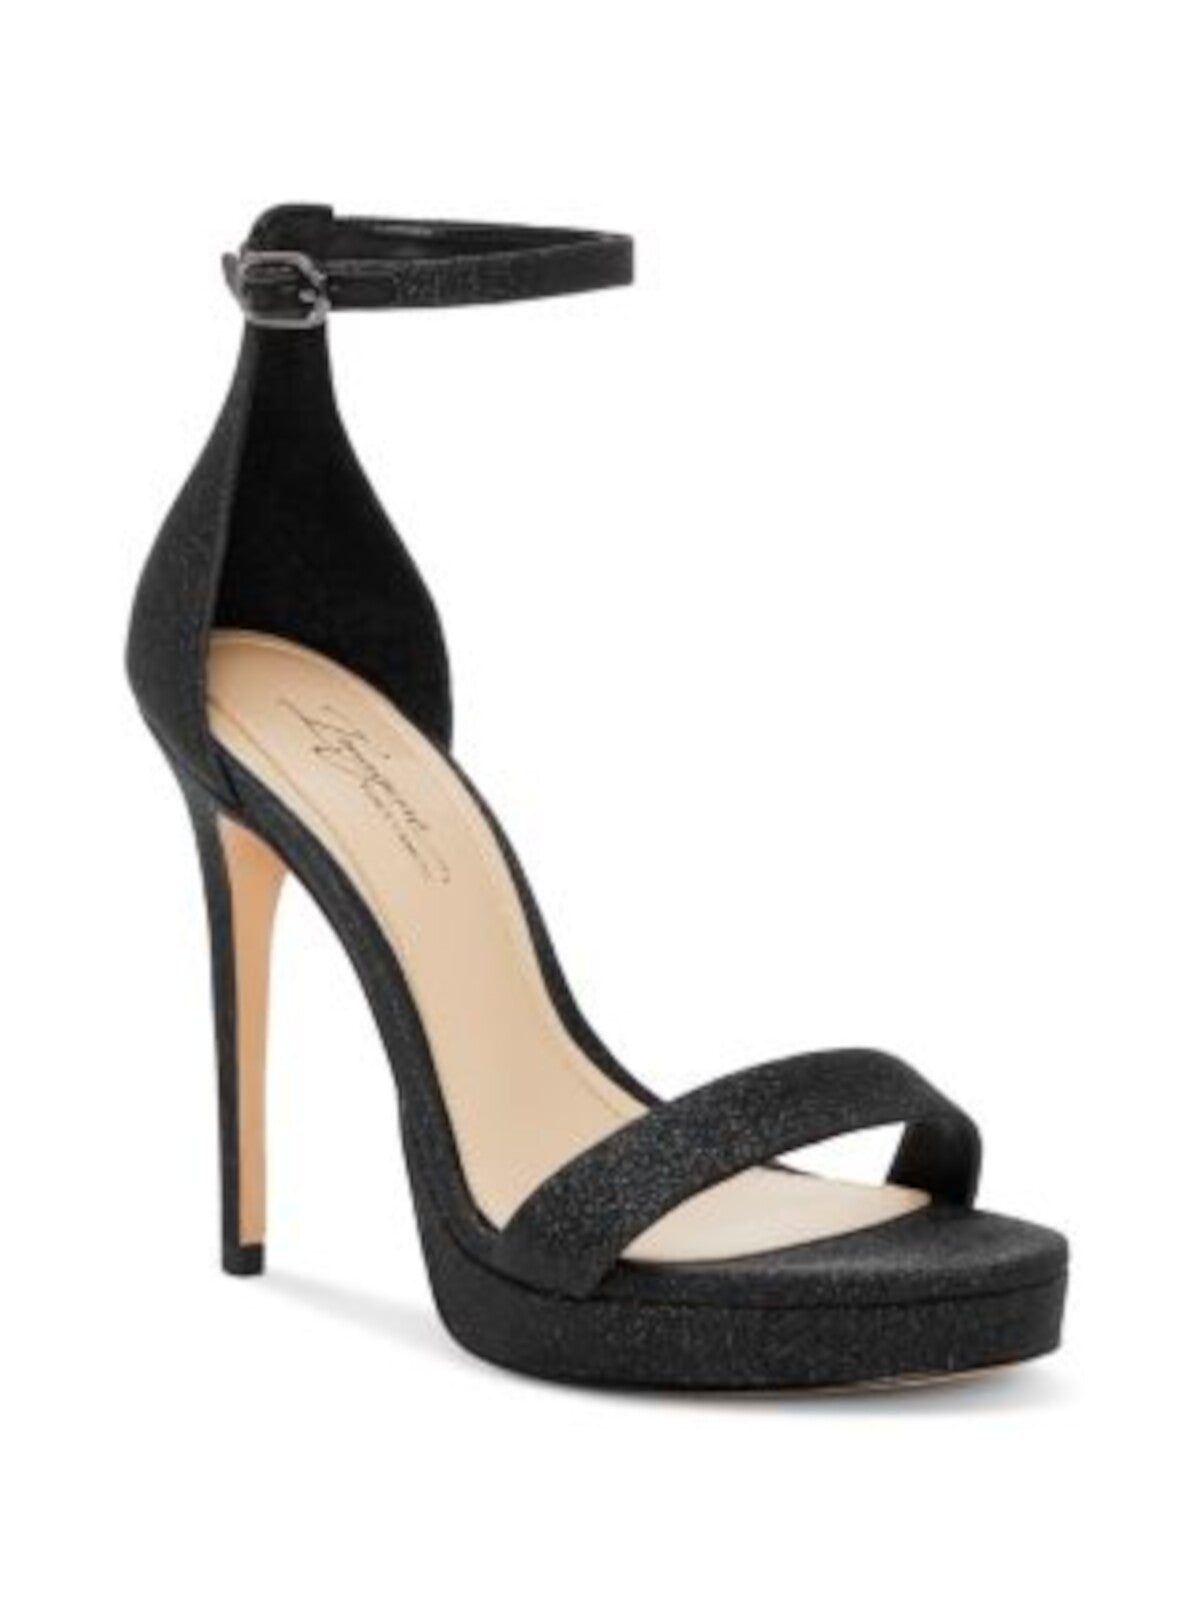 VINCE CAMUTO Womens Black 1" Platform Ankle Strap Glitter Preslyn Round Toe Stiletto Buckle Dress Sandals Shoes 9.5 M